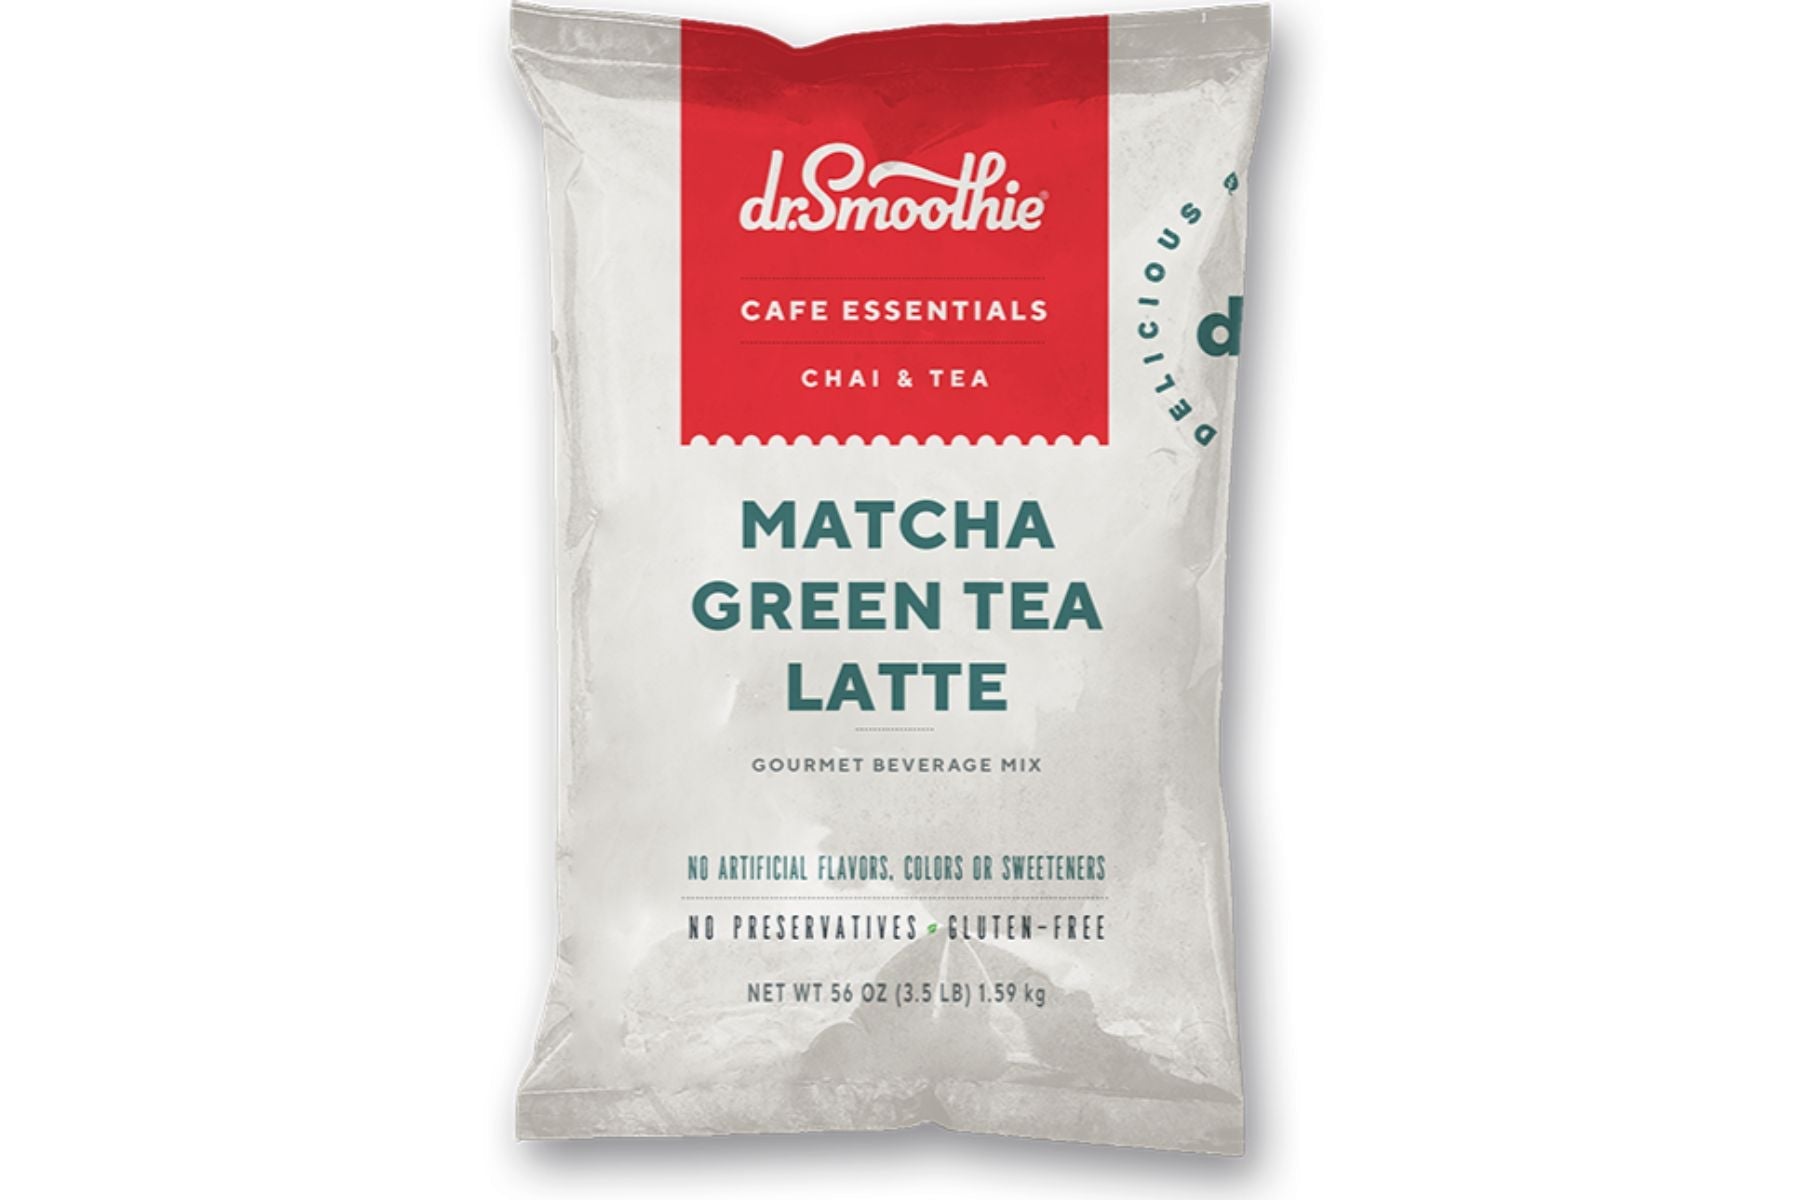 Dr. Smoothie Cafe Essentials Chai & Tea - 3.5lb Bulk Bag: Matcha Green Tea Latte